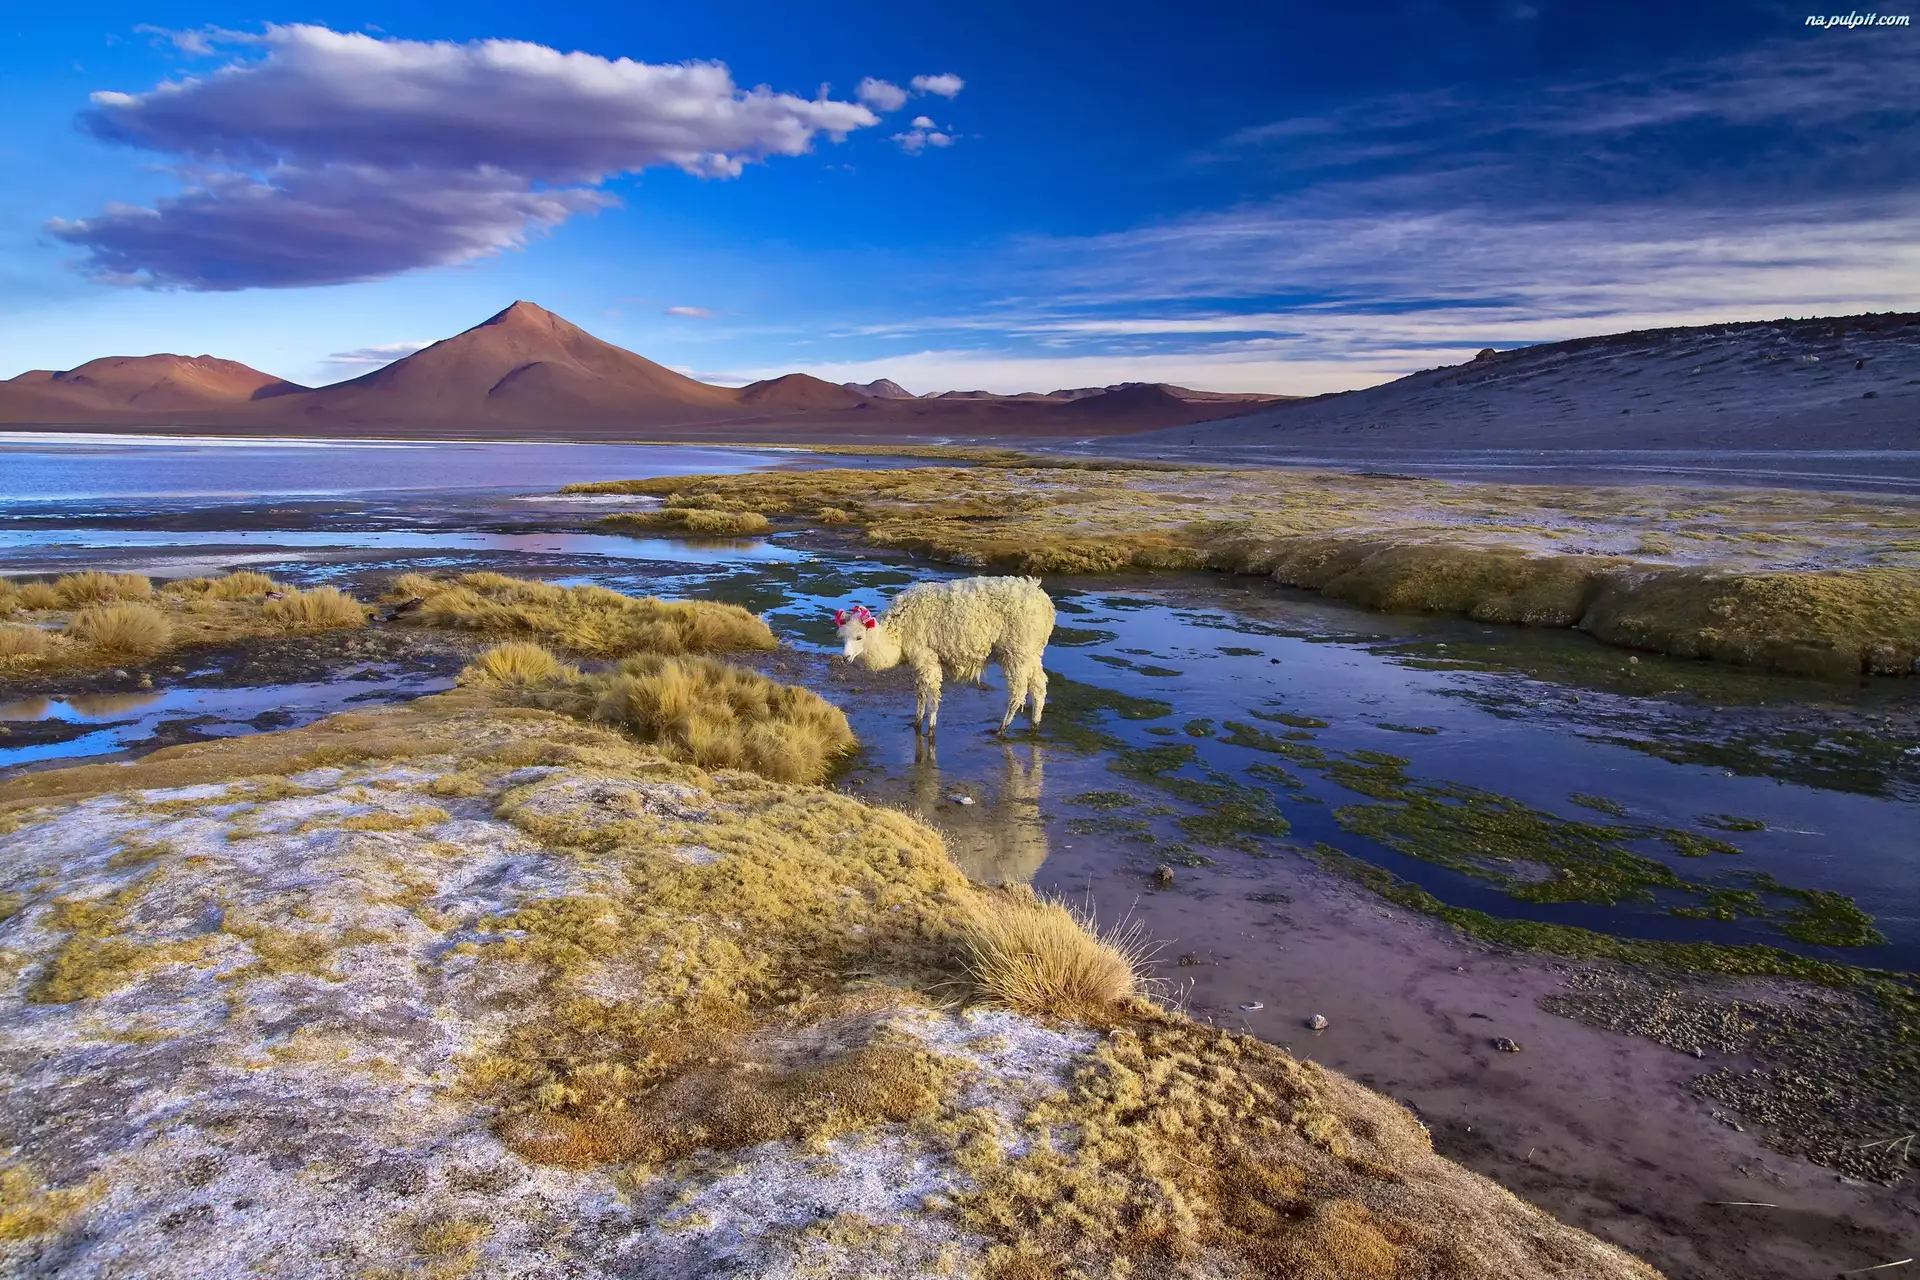 Alpaka, Boliwia, Jezioro